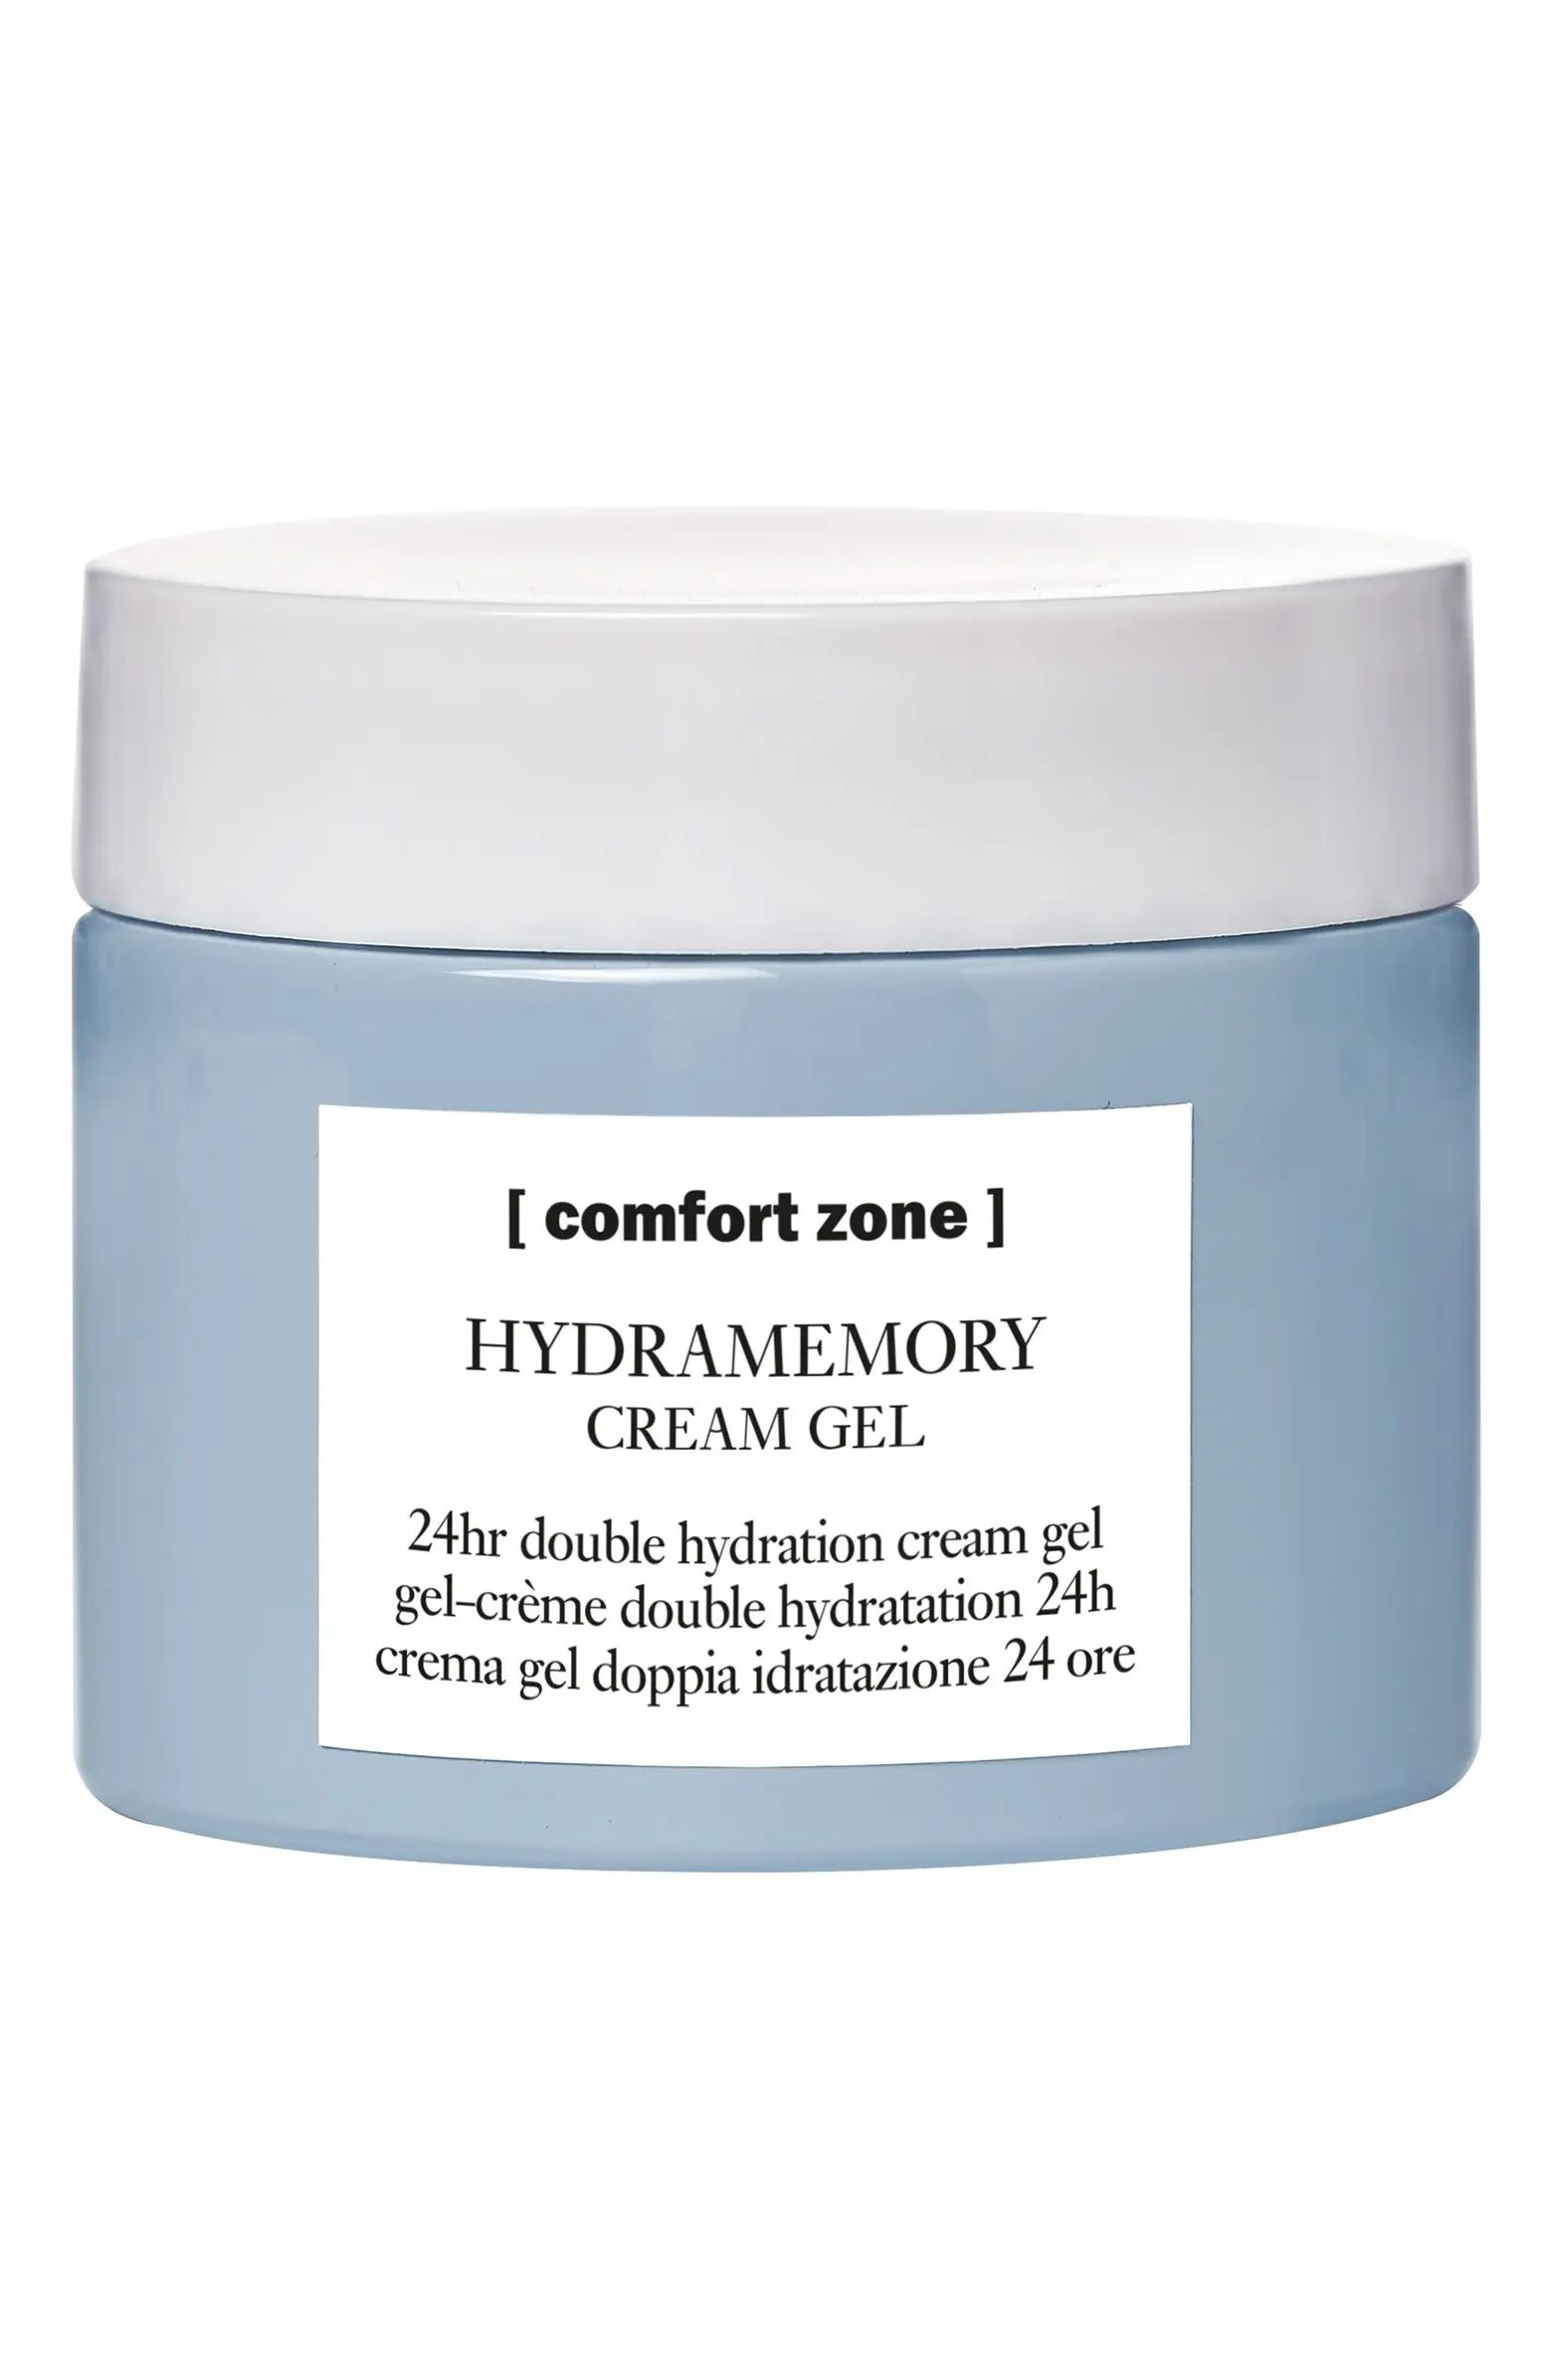 Hydramemory Cream Gel | Nordstrom